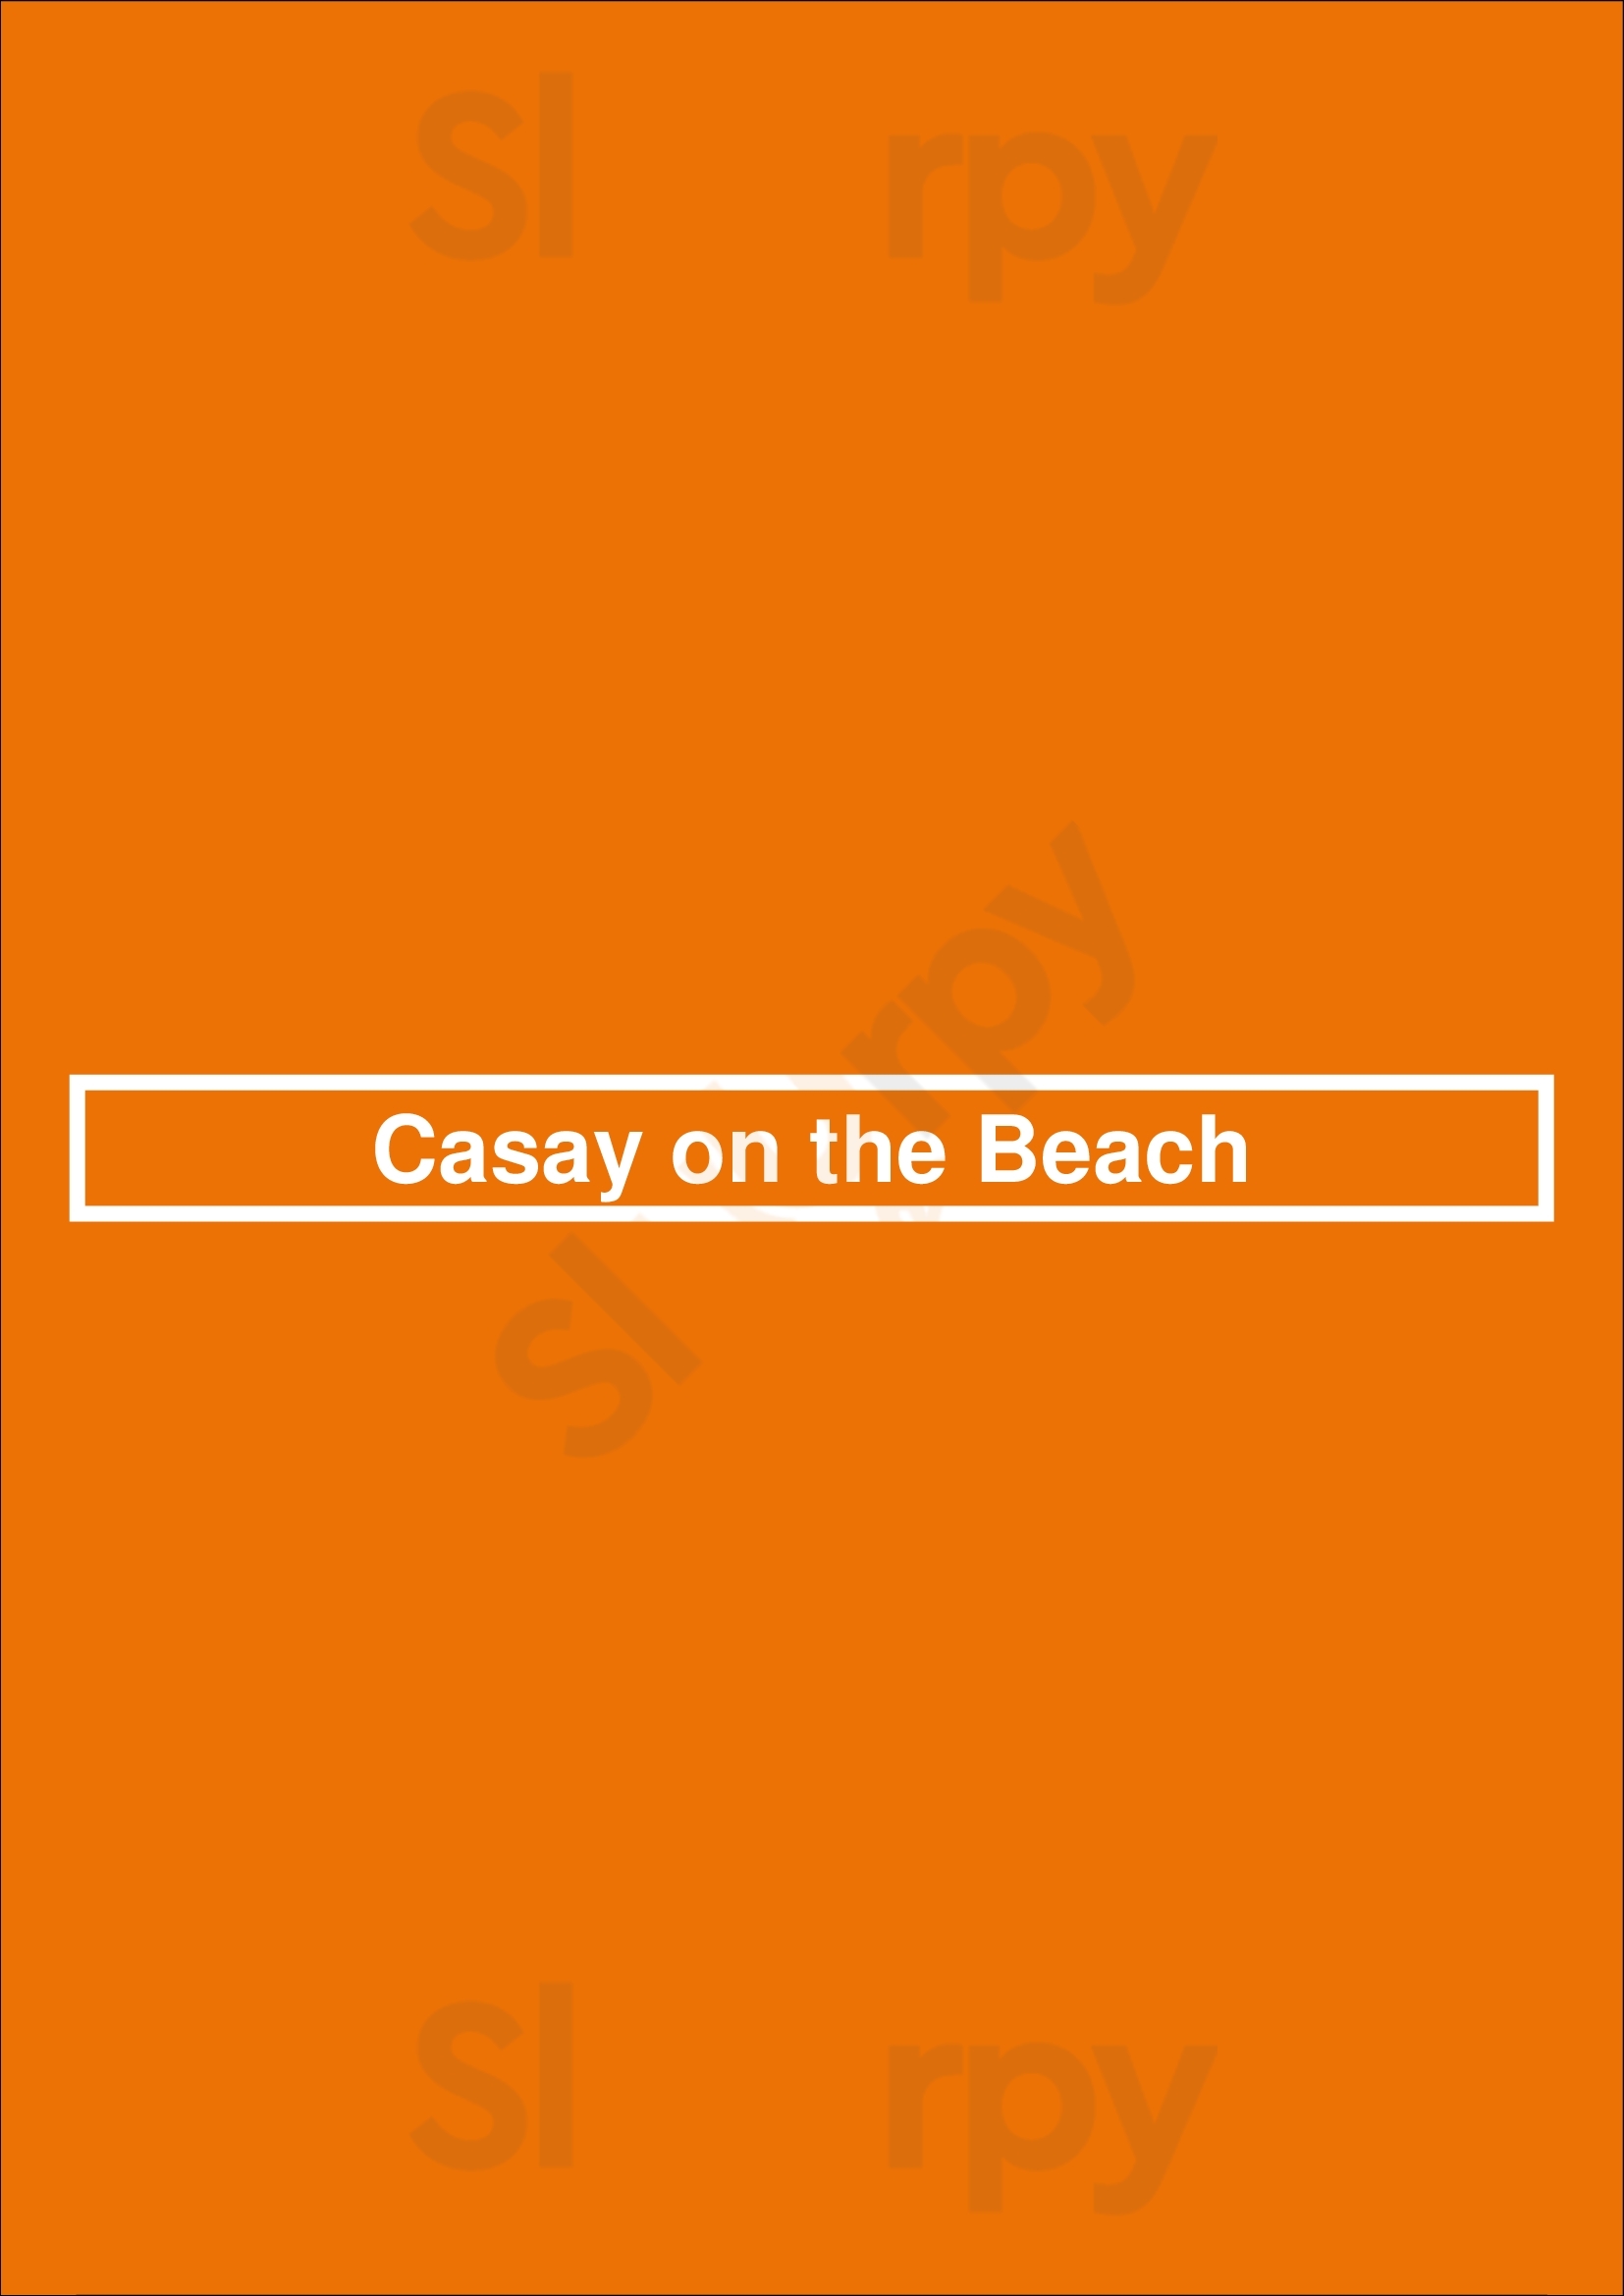 Casay On The Beach Coffs Harbour Menu - 1